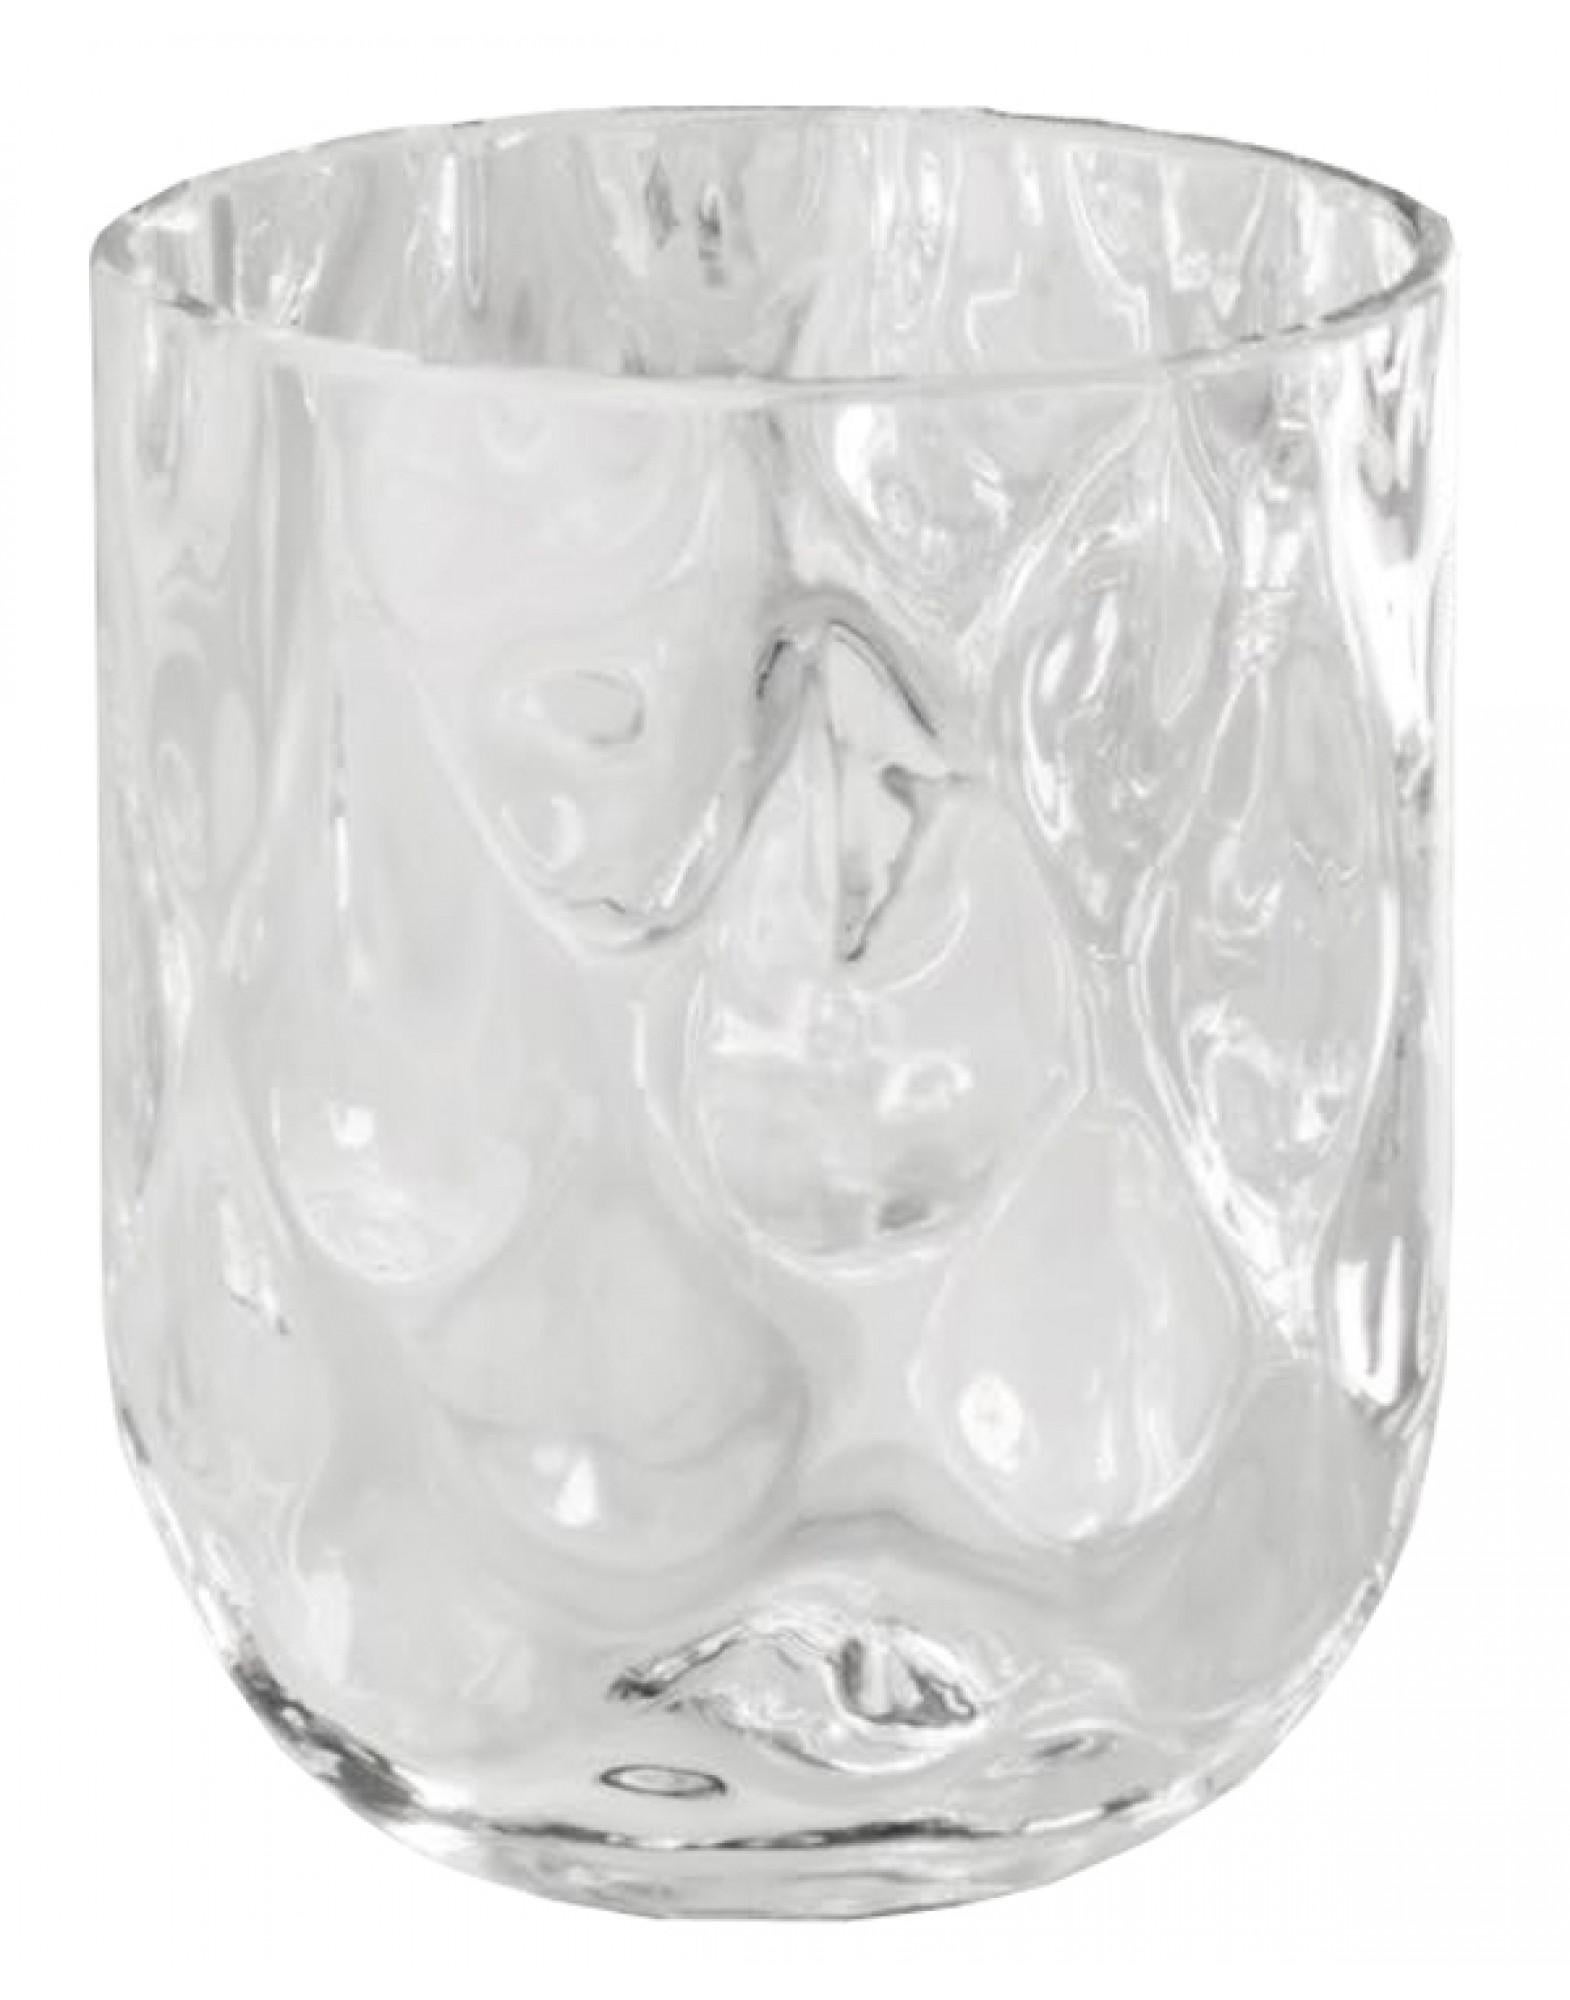 Modern Venini Bicchieri Carnevale Glass Set in Ice